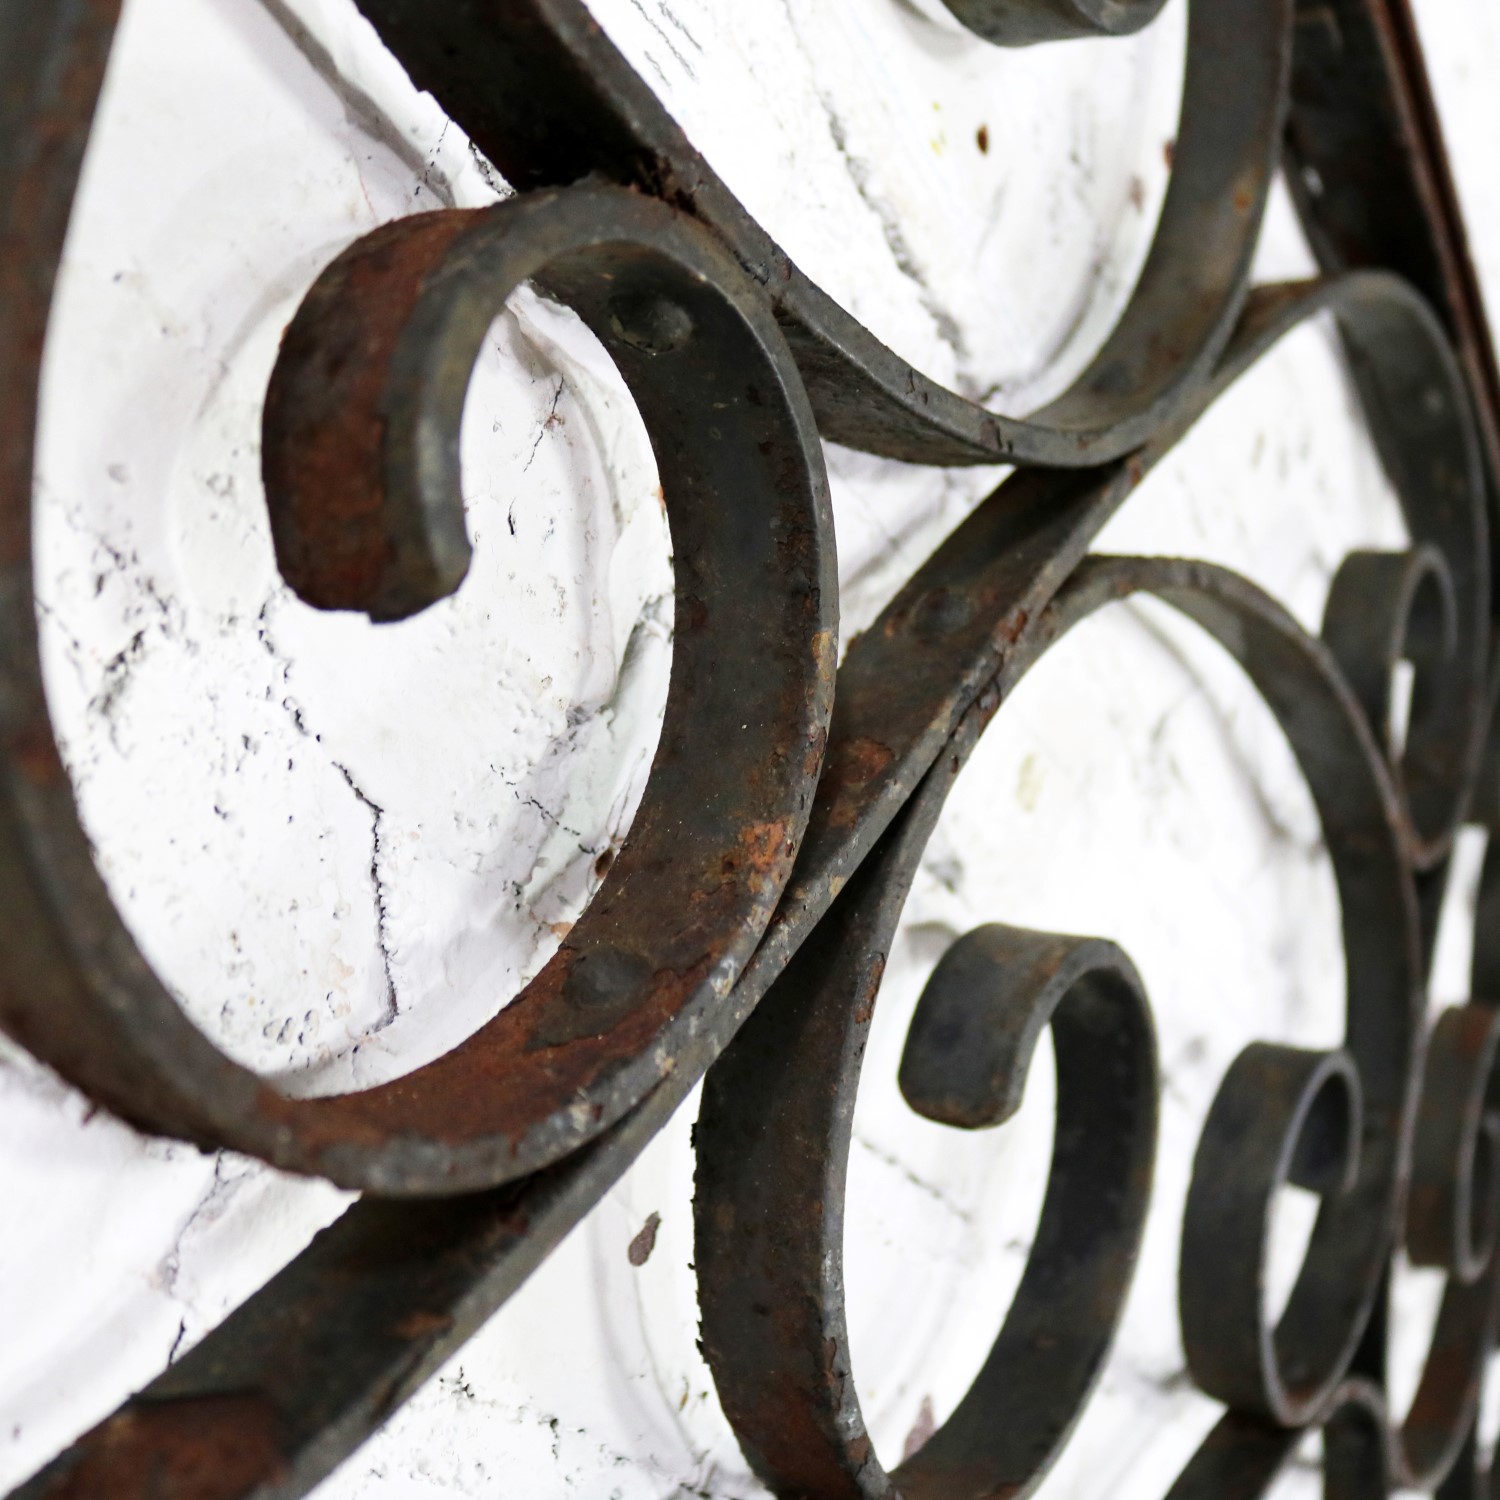 Antique Swirled Design Wrought Iron Railing Piece Trellis or Fence Section